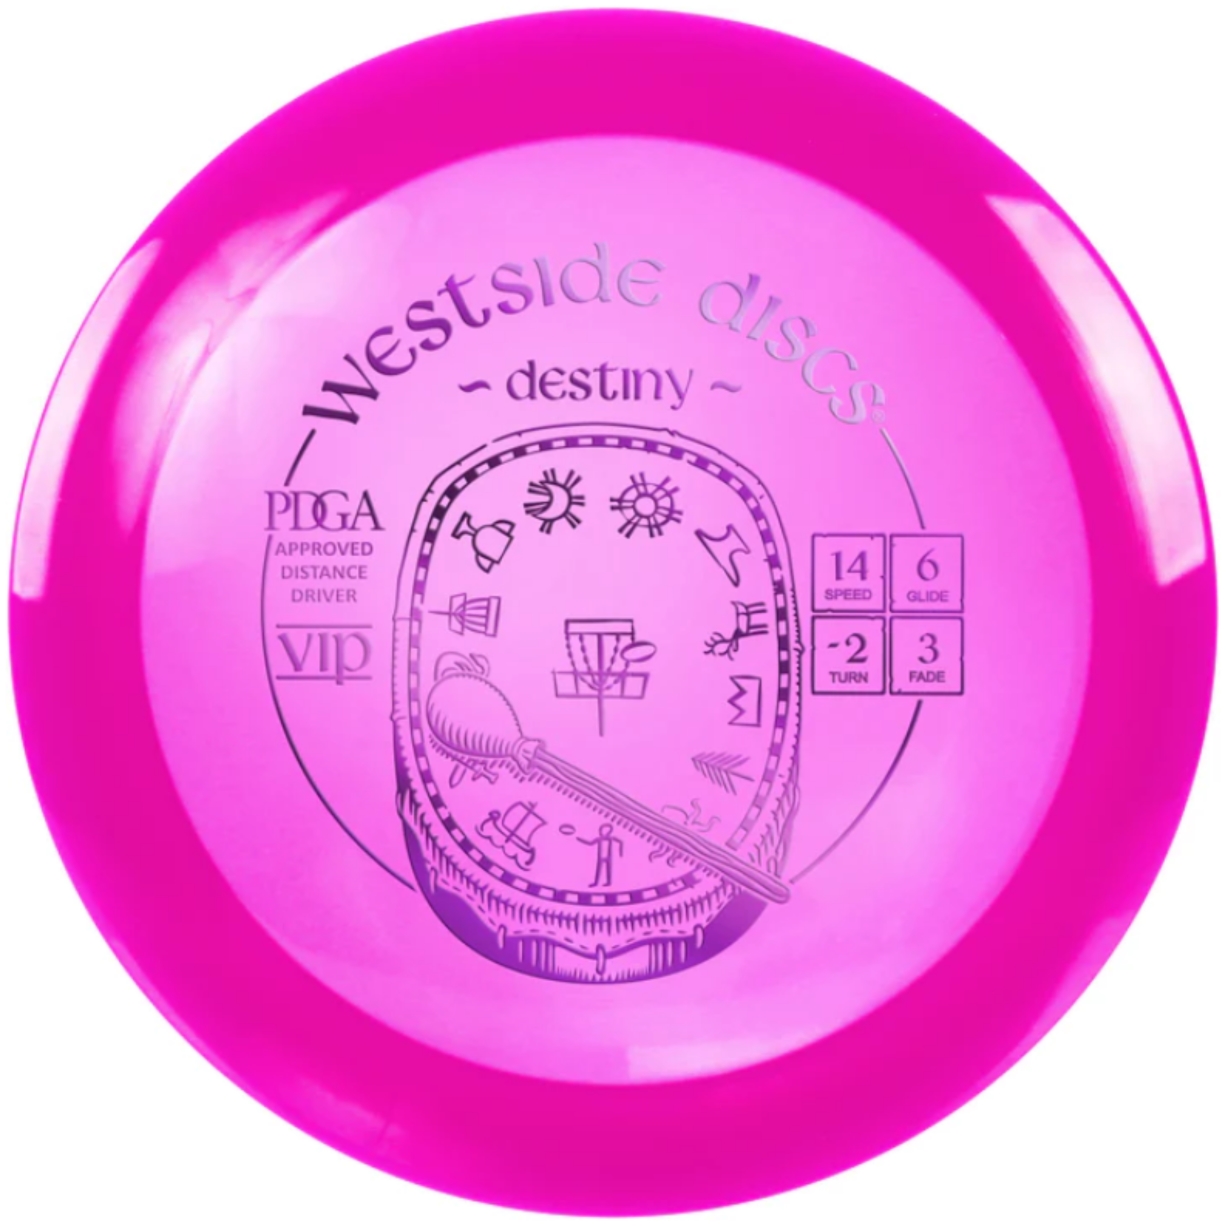 Westside Discs - VIP Destiny Pink (Distance Driver) | Discgolf